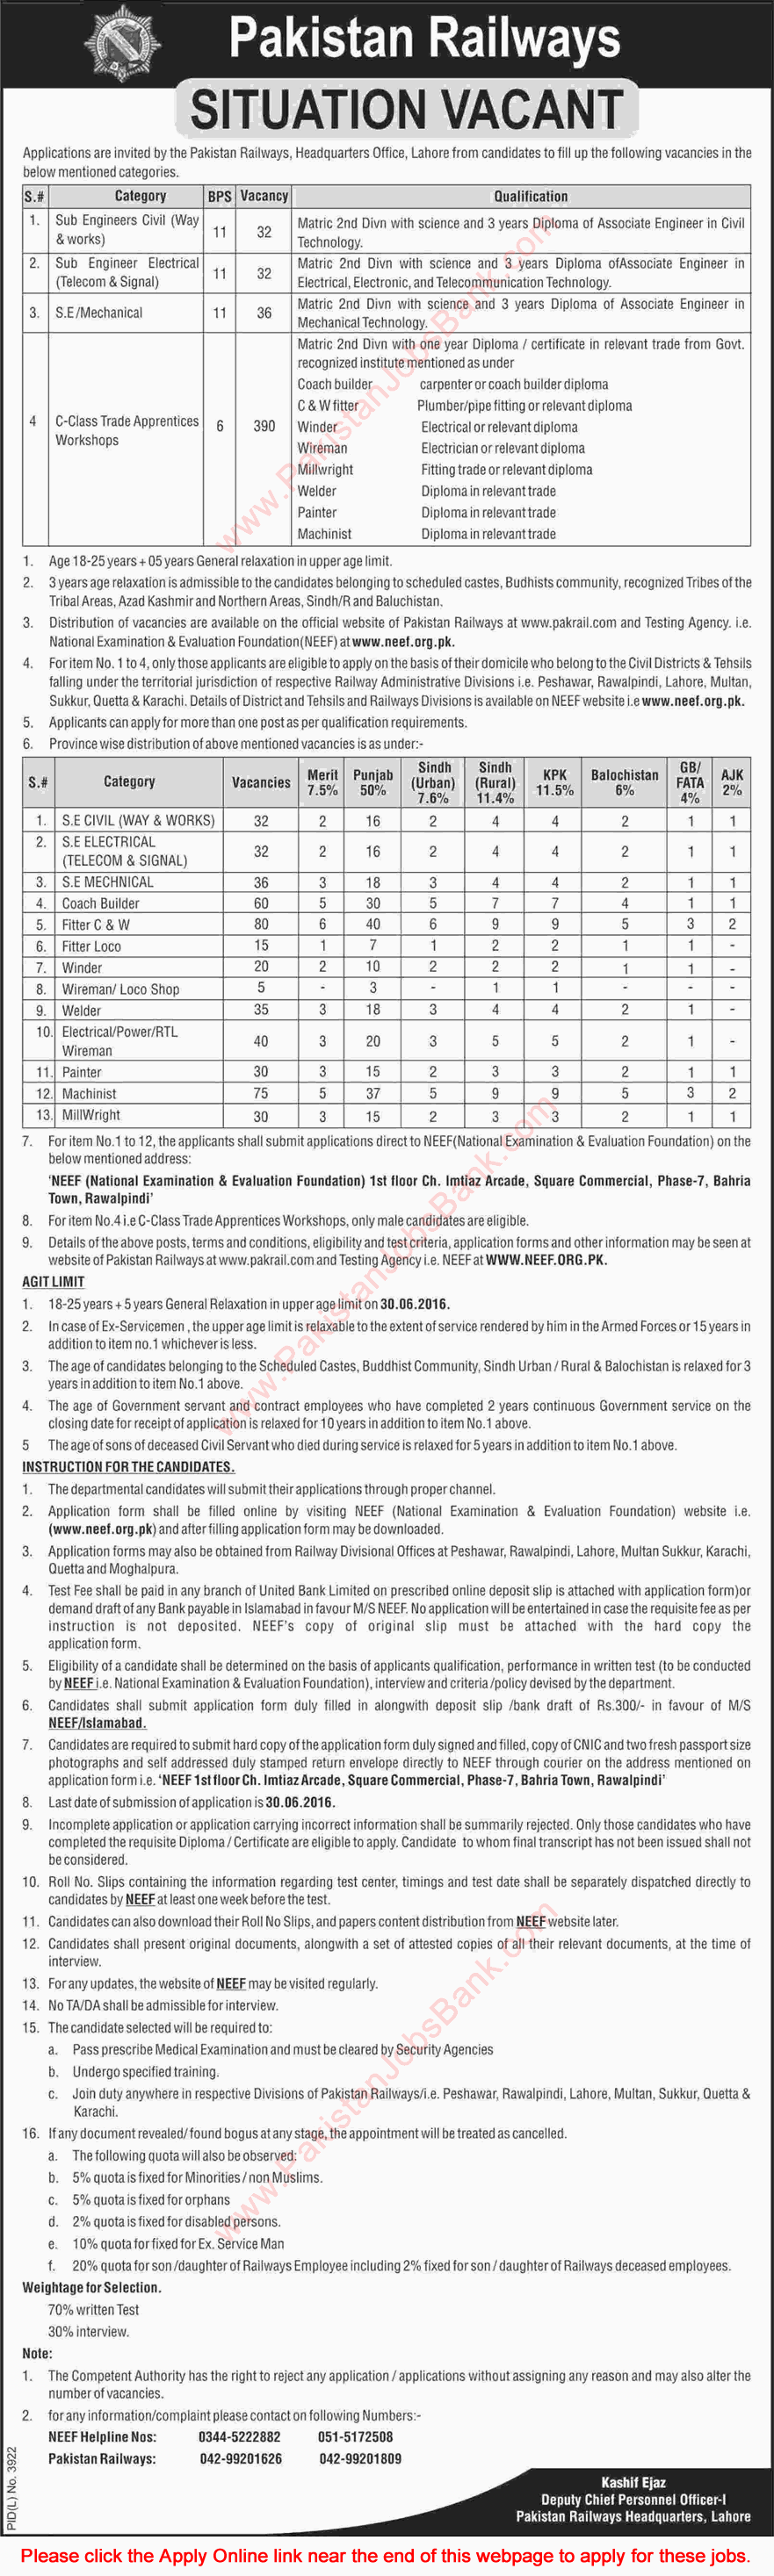 Pakistan Railway Jobs June 2016 Sub Engineers, & Trade Apprentices NEEF Online Application Form Latest